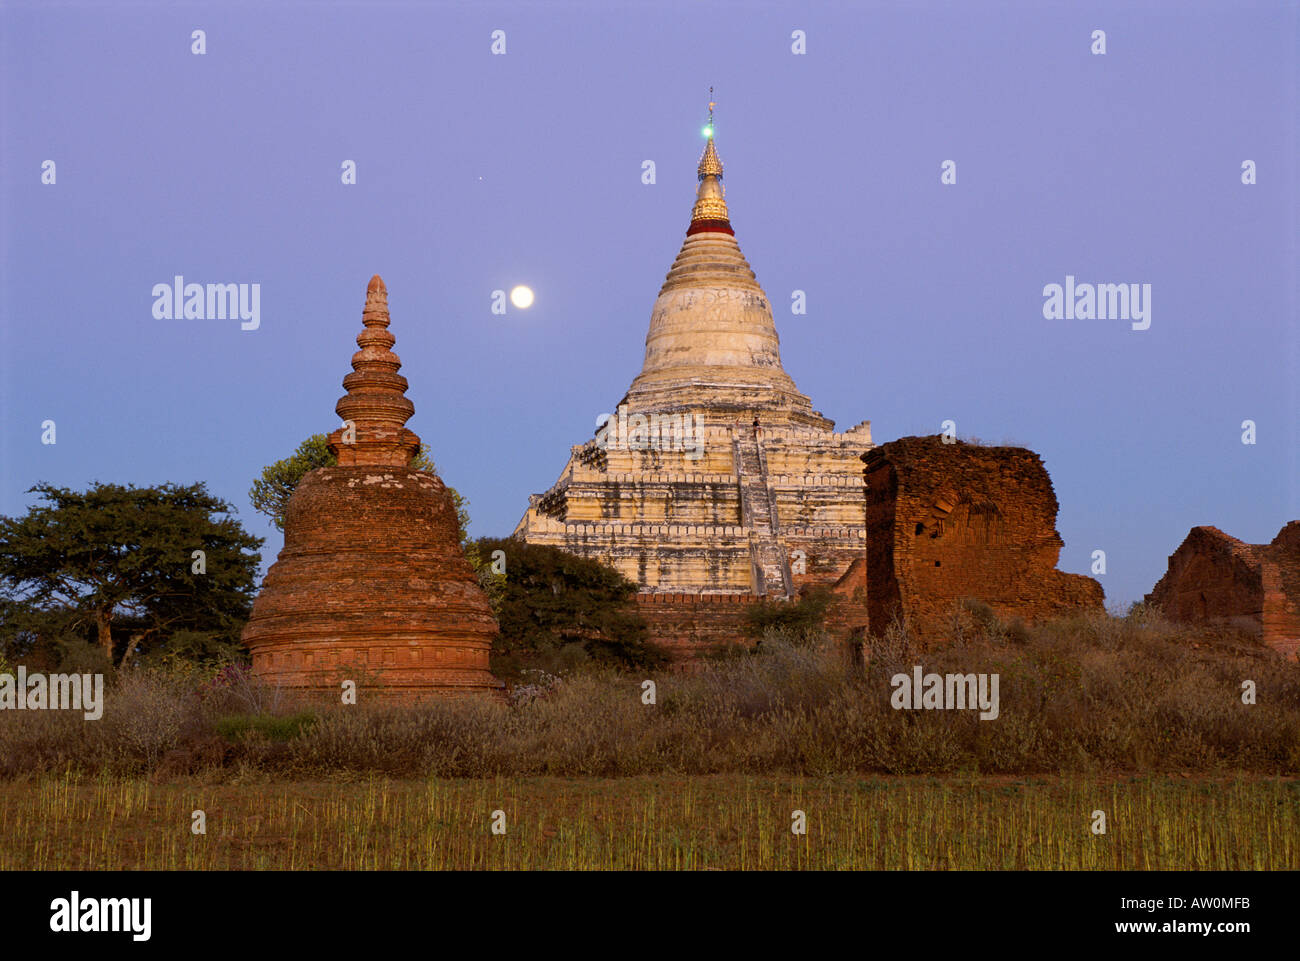 Shwesandaw Paya (Shwe Sandaw Pagoda) built in the 11th century, Bagan (Pagan), Myanmar (Burma) Stock Photo